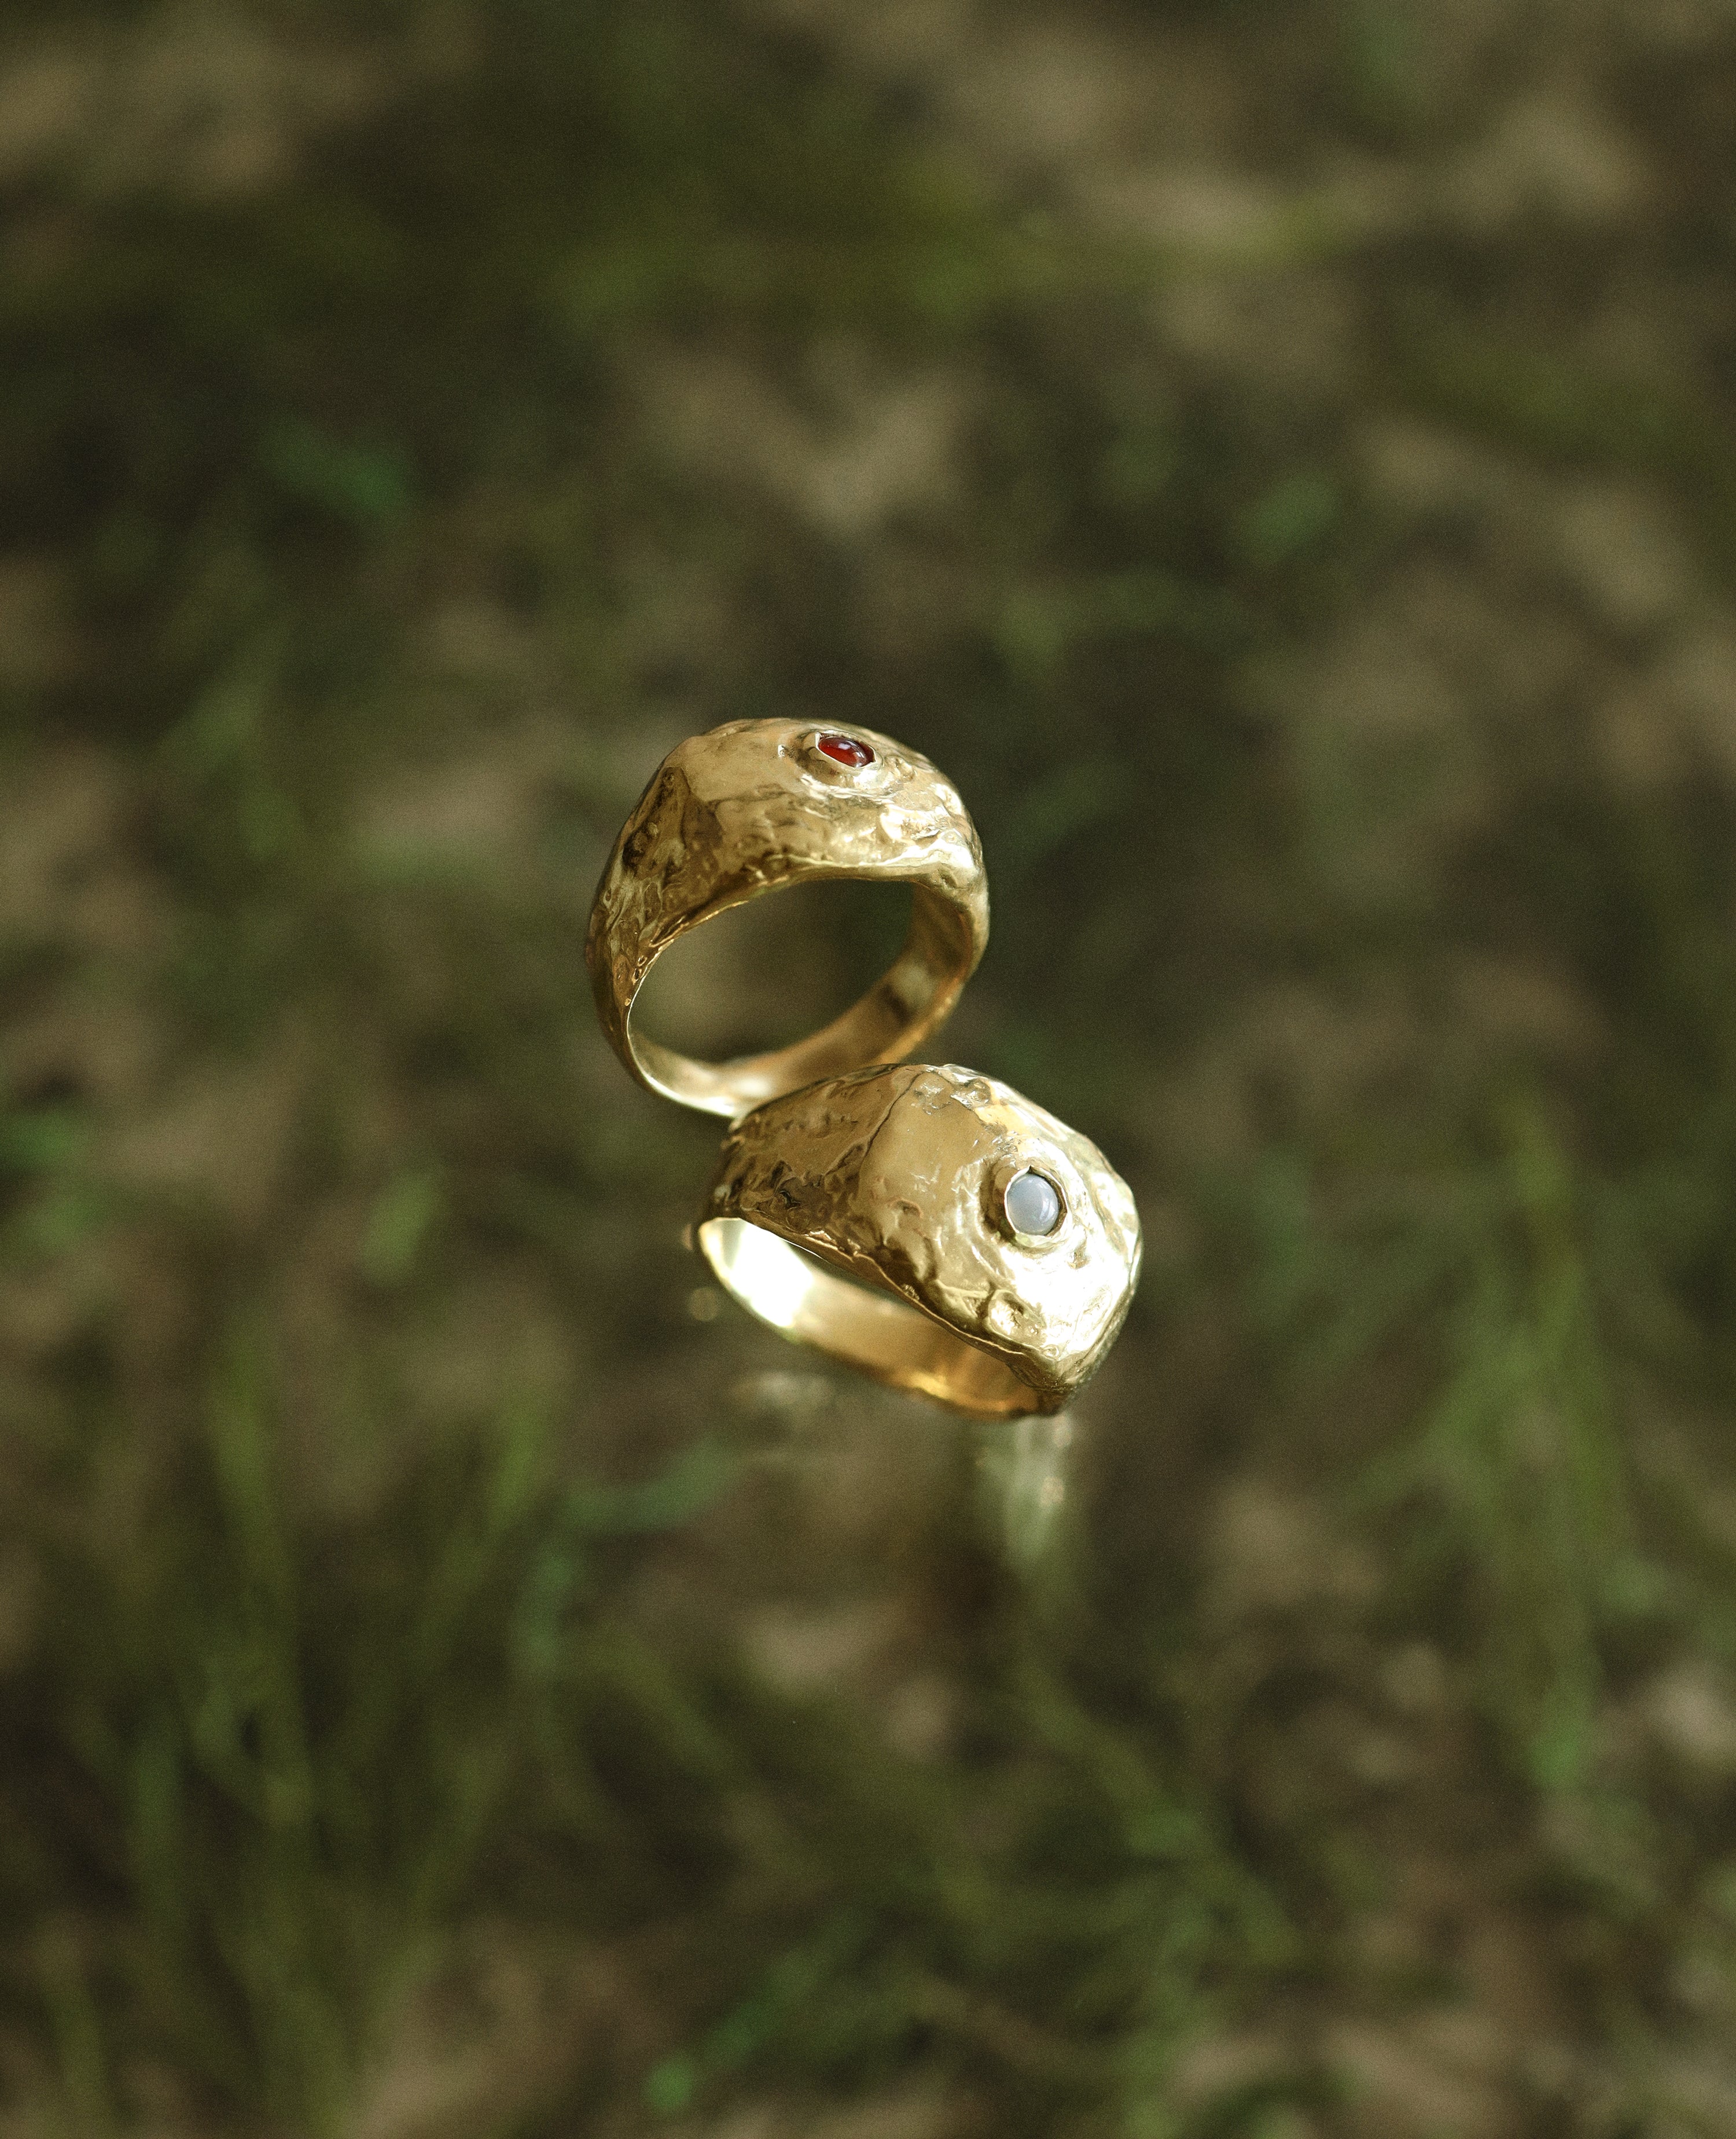 NUCLEUS SIGNET // golden ring - ORA-C jewelry - handmade jewelry by Montreal based independent designer Caroline Pham